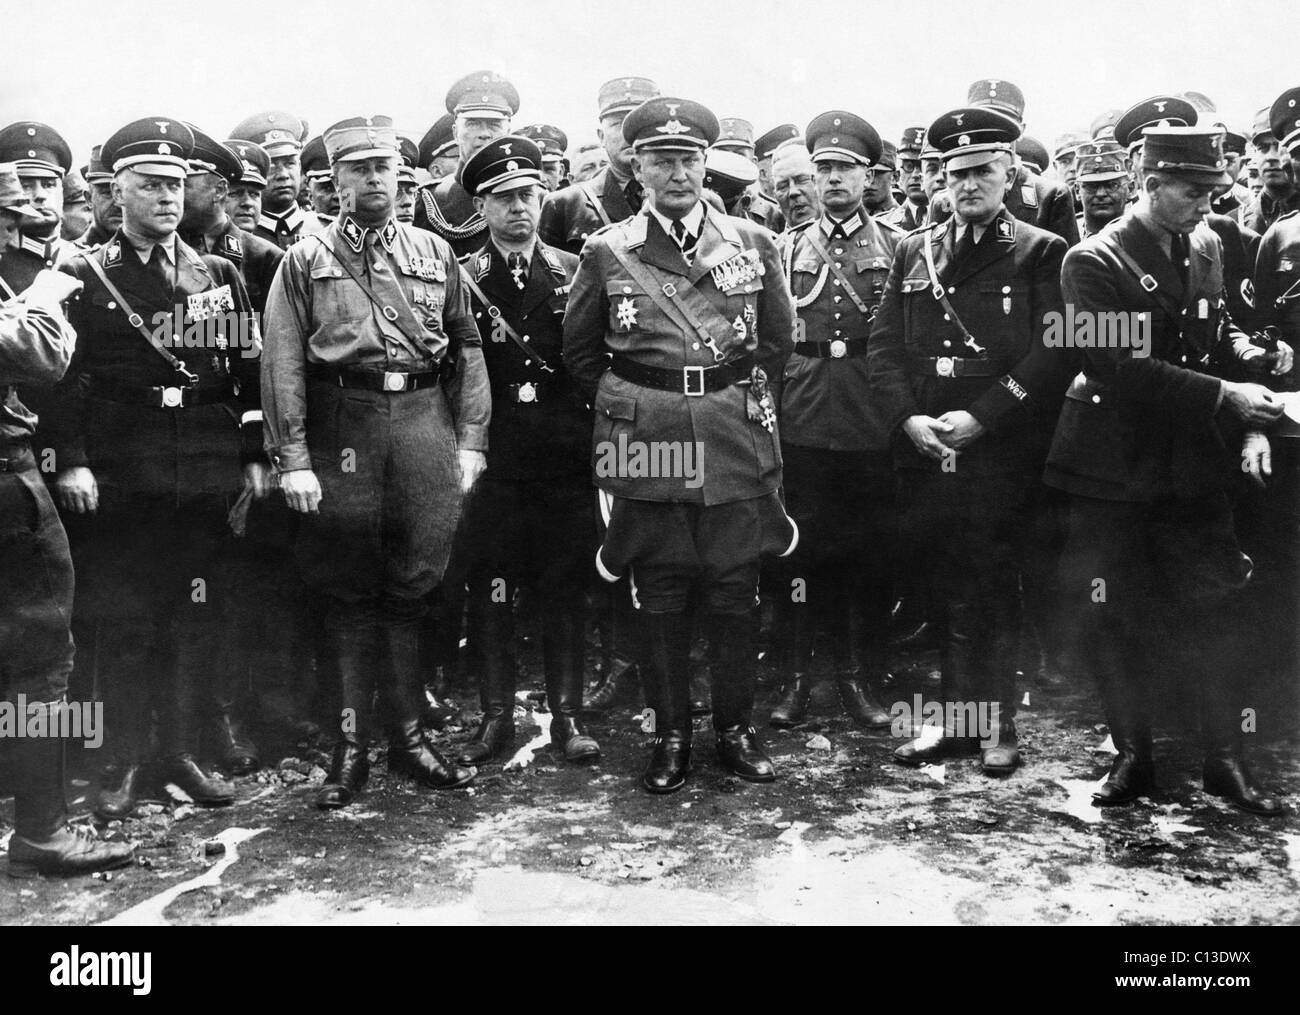 Commander-in-chief of the Luftwaffe Hermann Goering, center, at 10th commemoration for Albert Leo Schlageter, Dusseldorf, 1933 Stock Photo